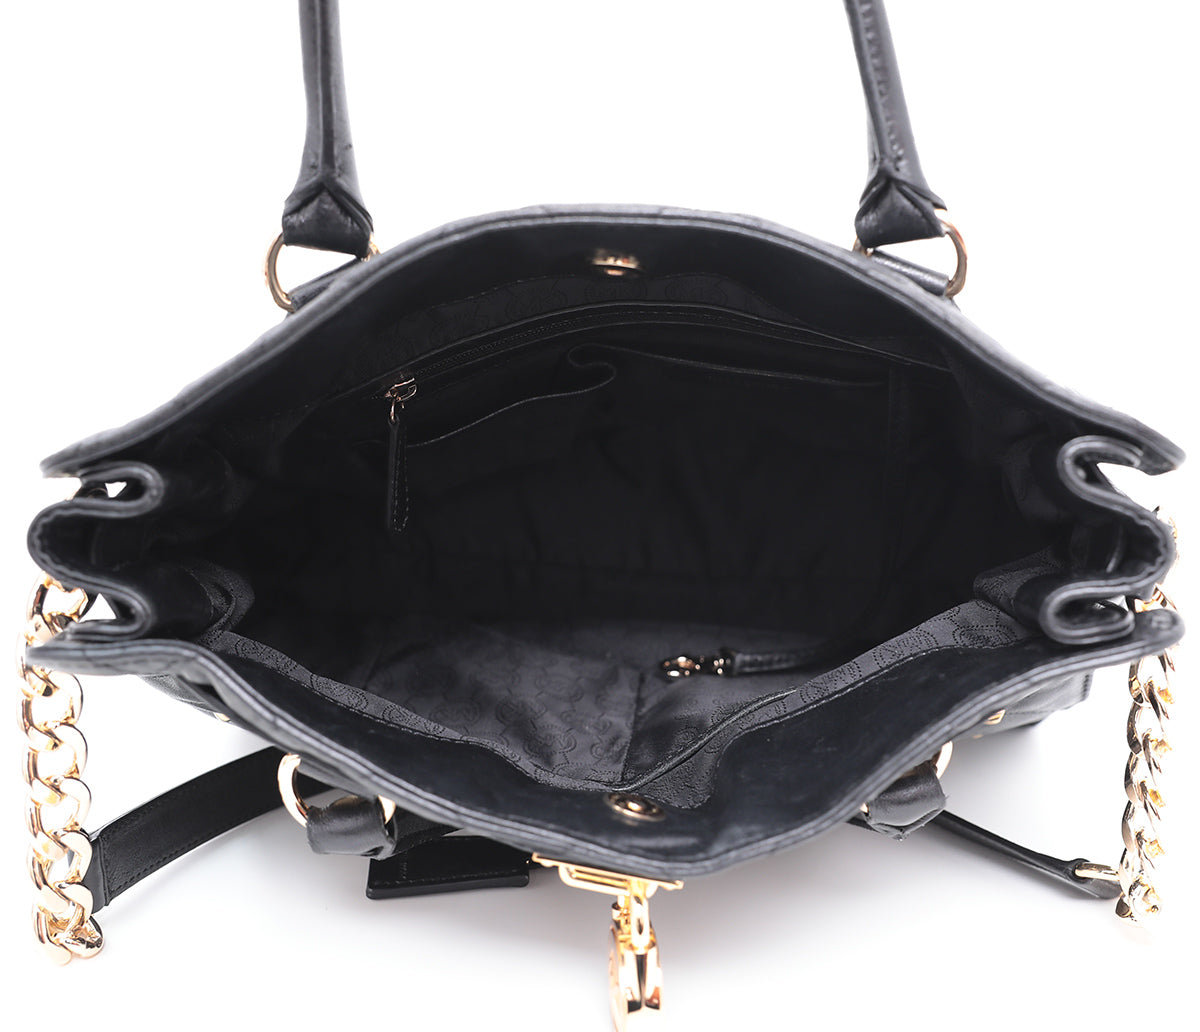 NWT MICHAEL KORS HAMILTON Large Leather BAG Black $348